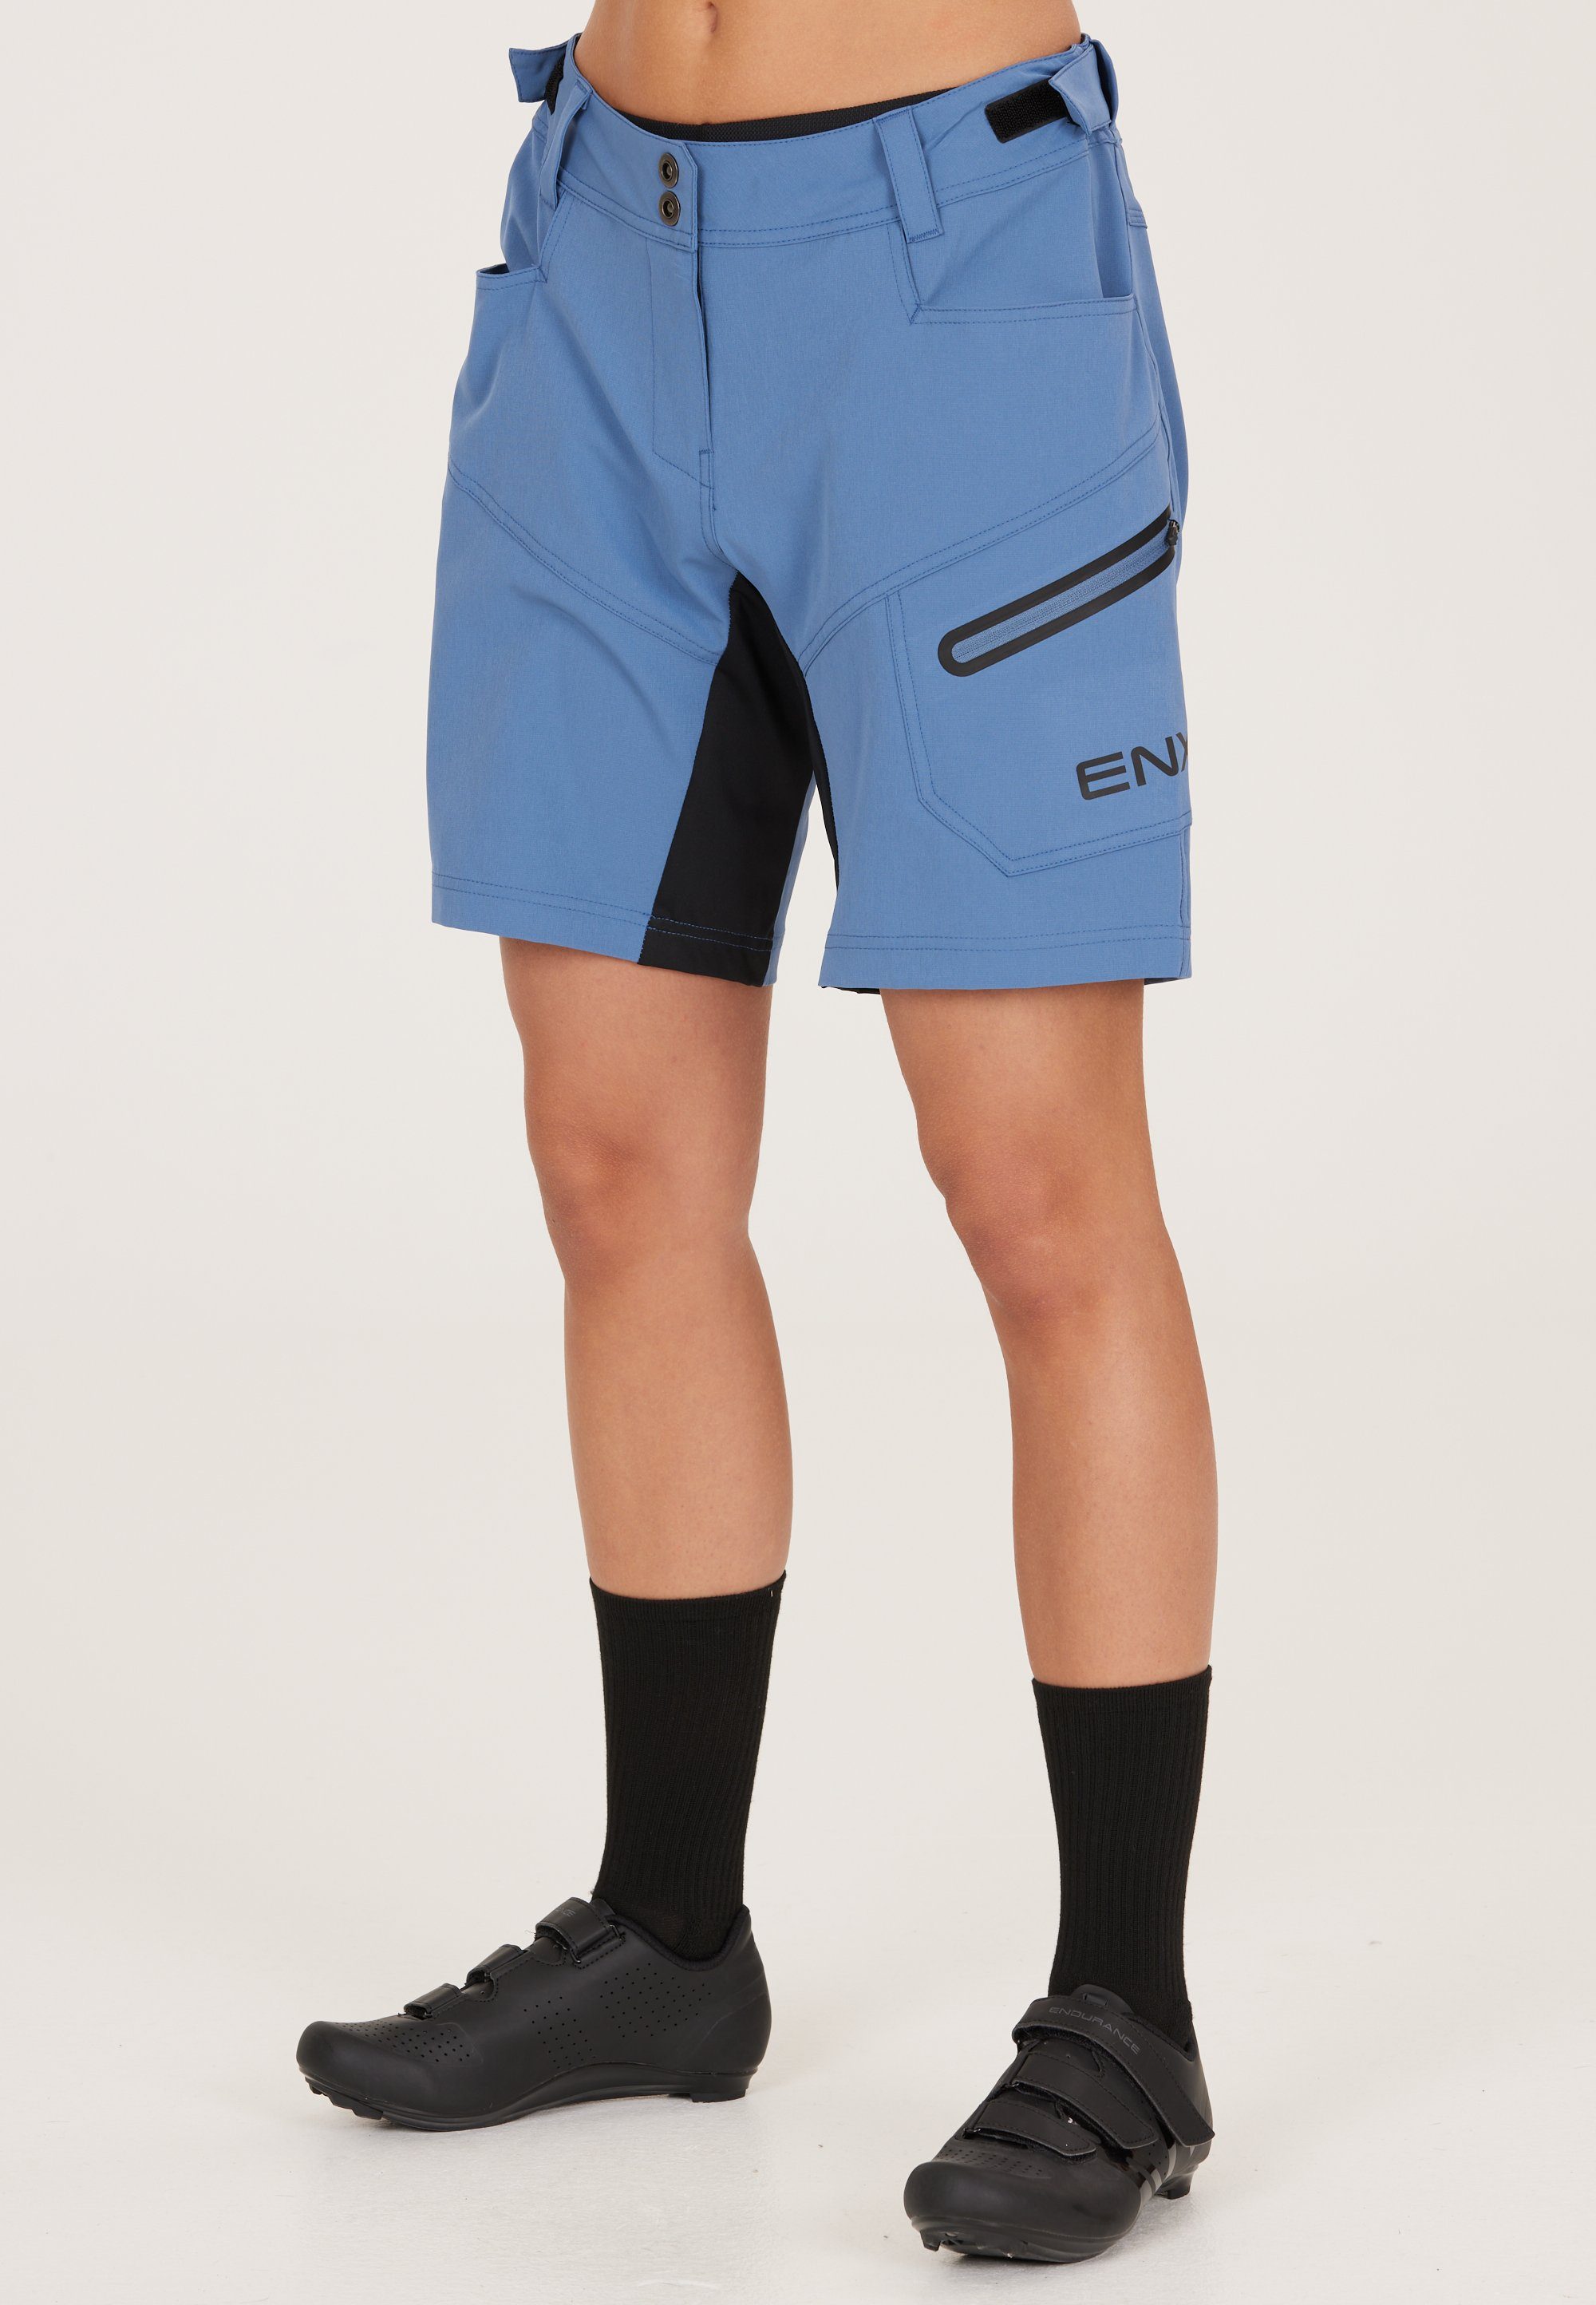 ENDURANCE Radhose Jamilla W 2 Innen-Tights Shorts herausnehmbarer 1 blau in mit